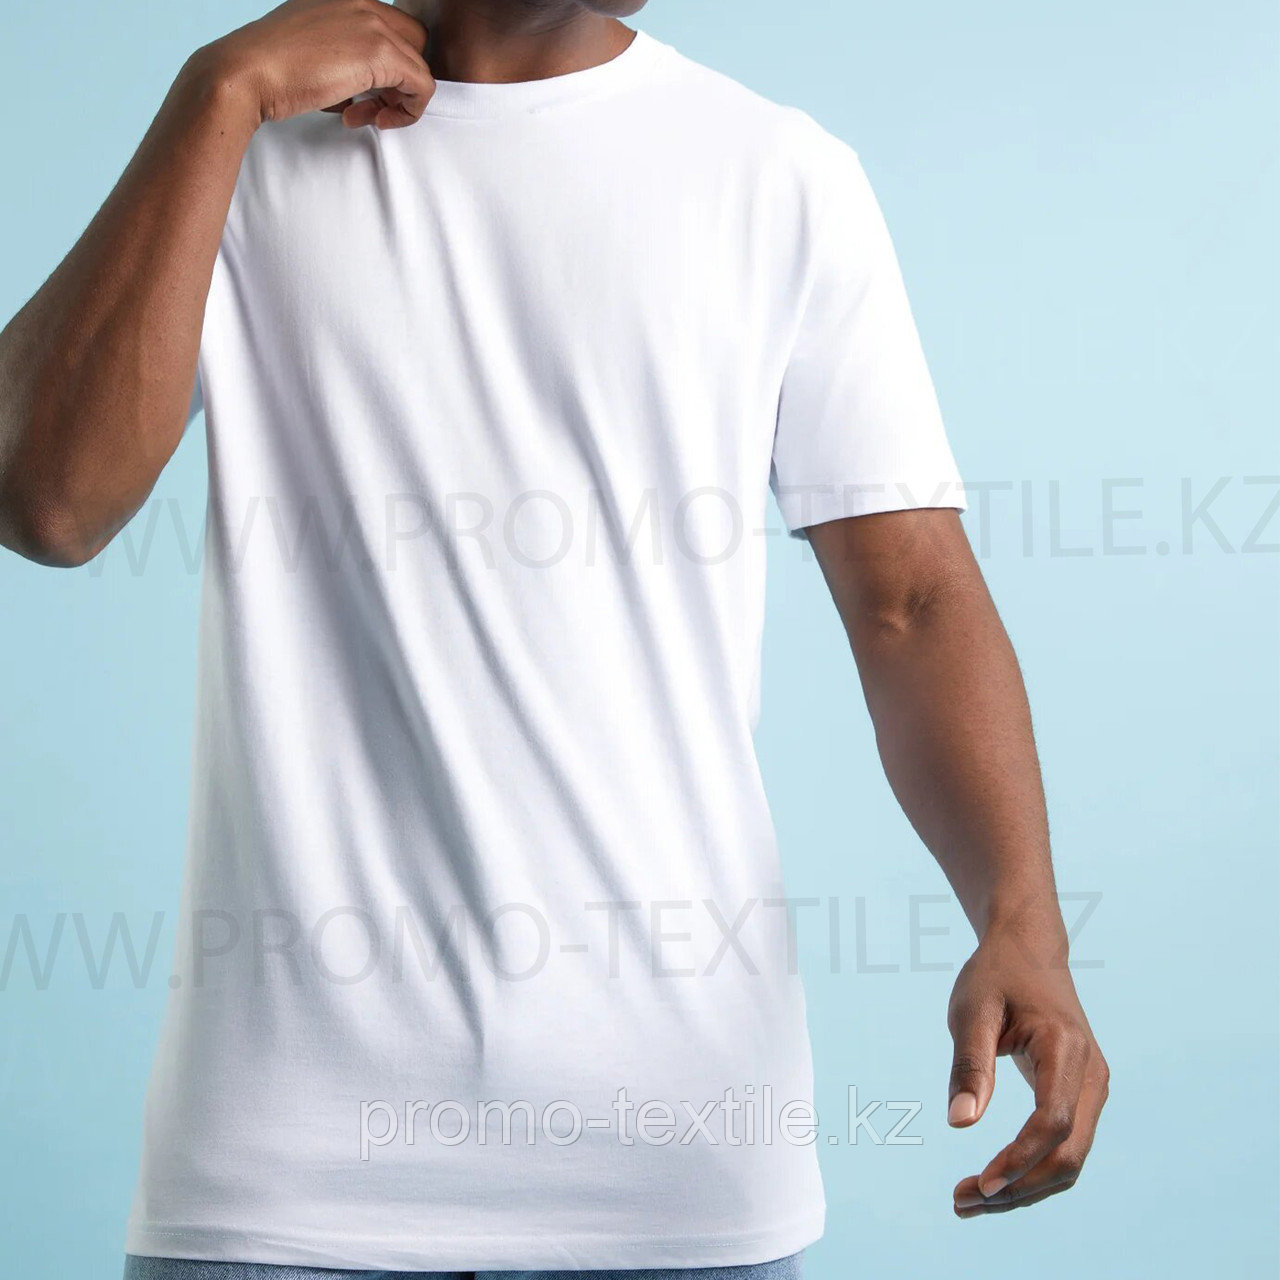 Пошив футболки на заказ (180гр) | Базовая футболка белого цвета